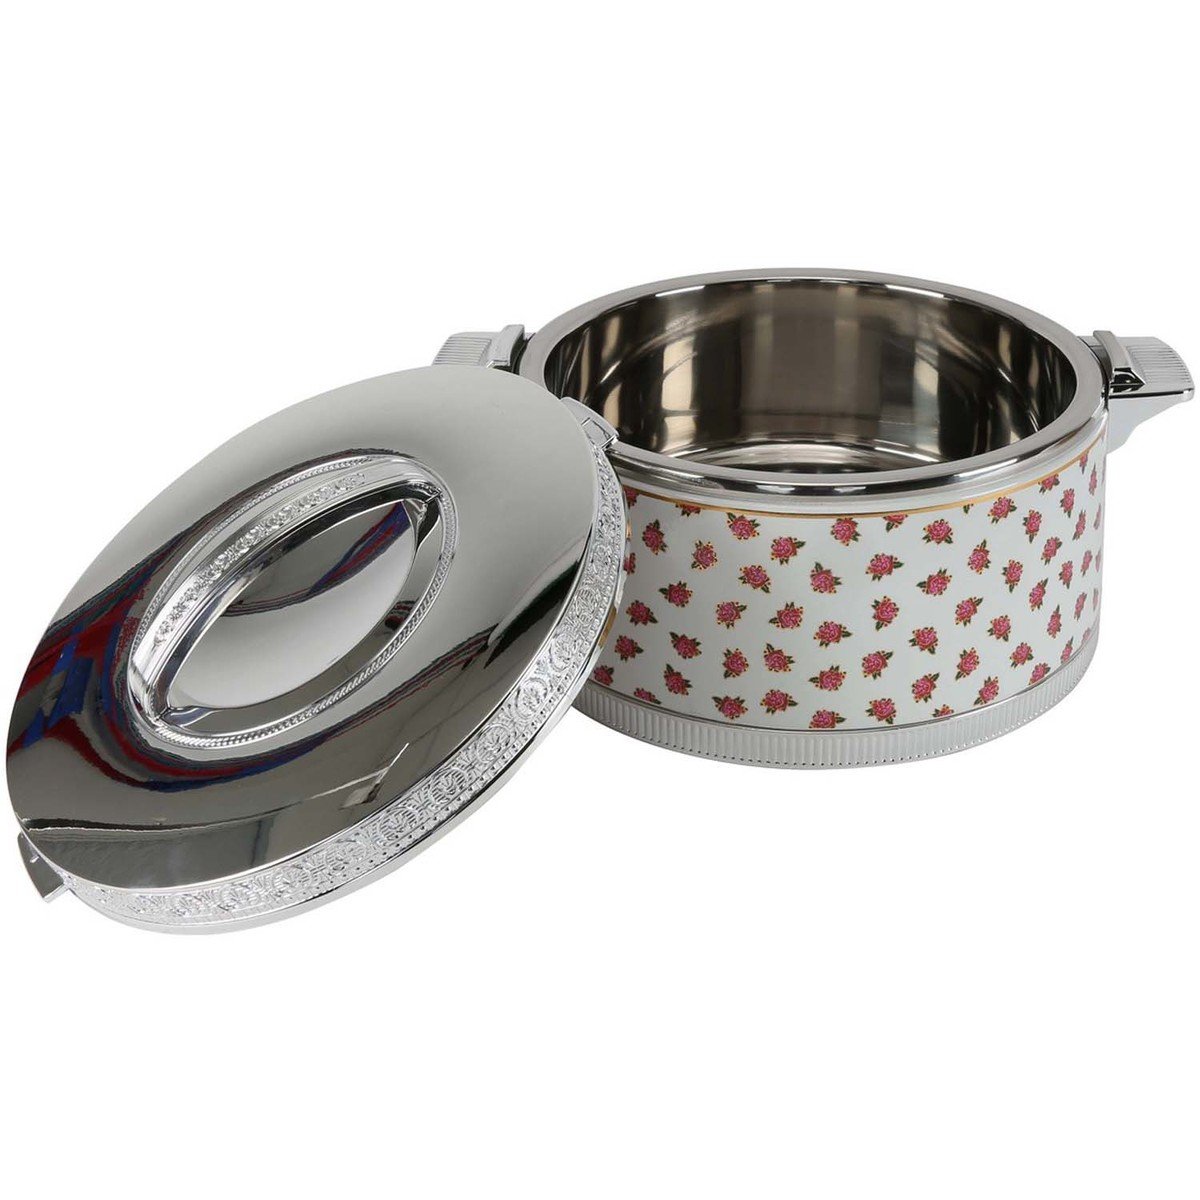 Chefline Hot Pot Silver HPS2-02 3.5Ltr